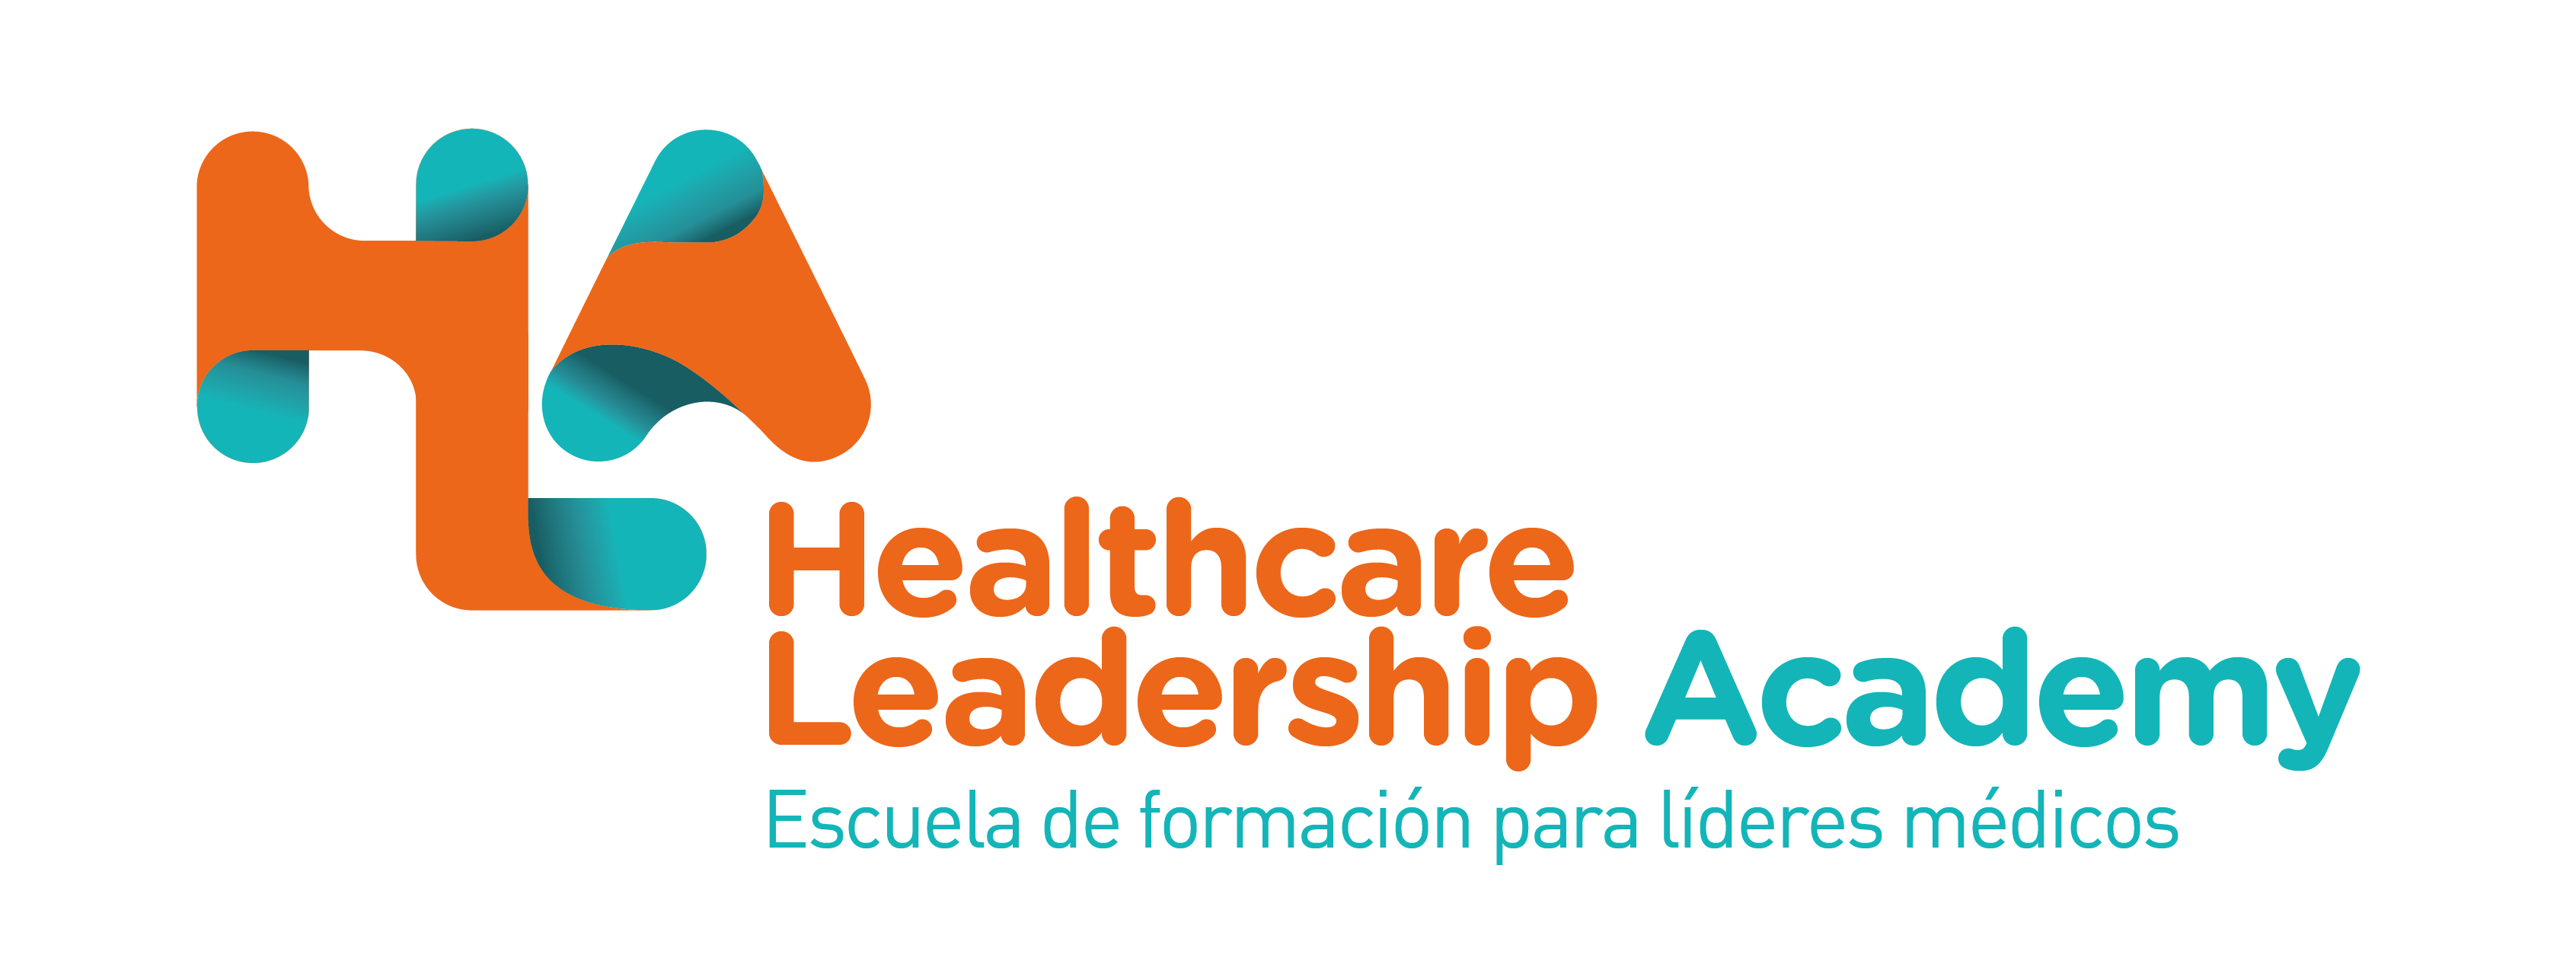 Healthcare Leadership Academy VF OK-01.png